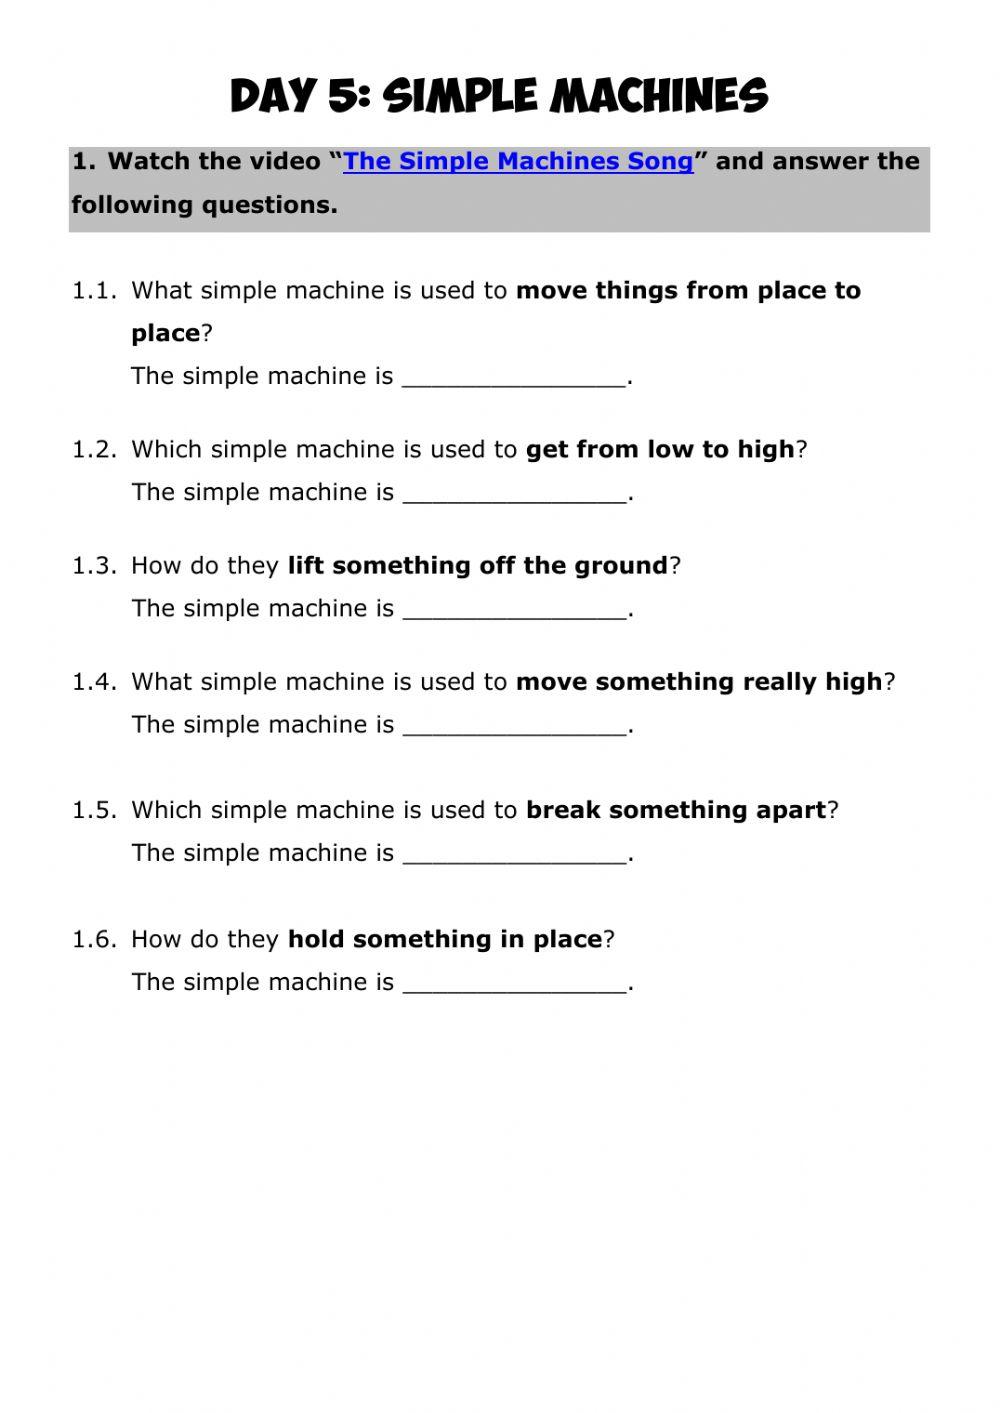 MACHINES 2 - Simple Machines